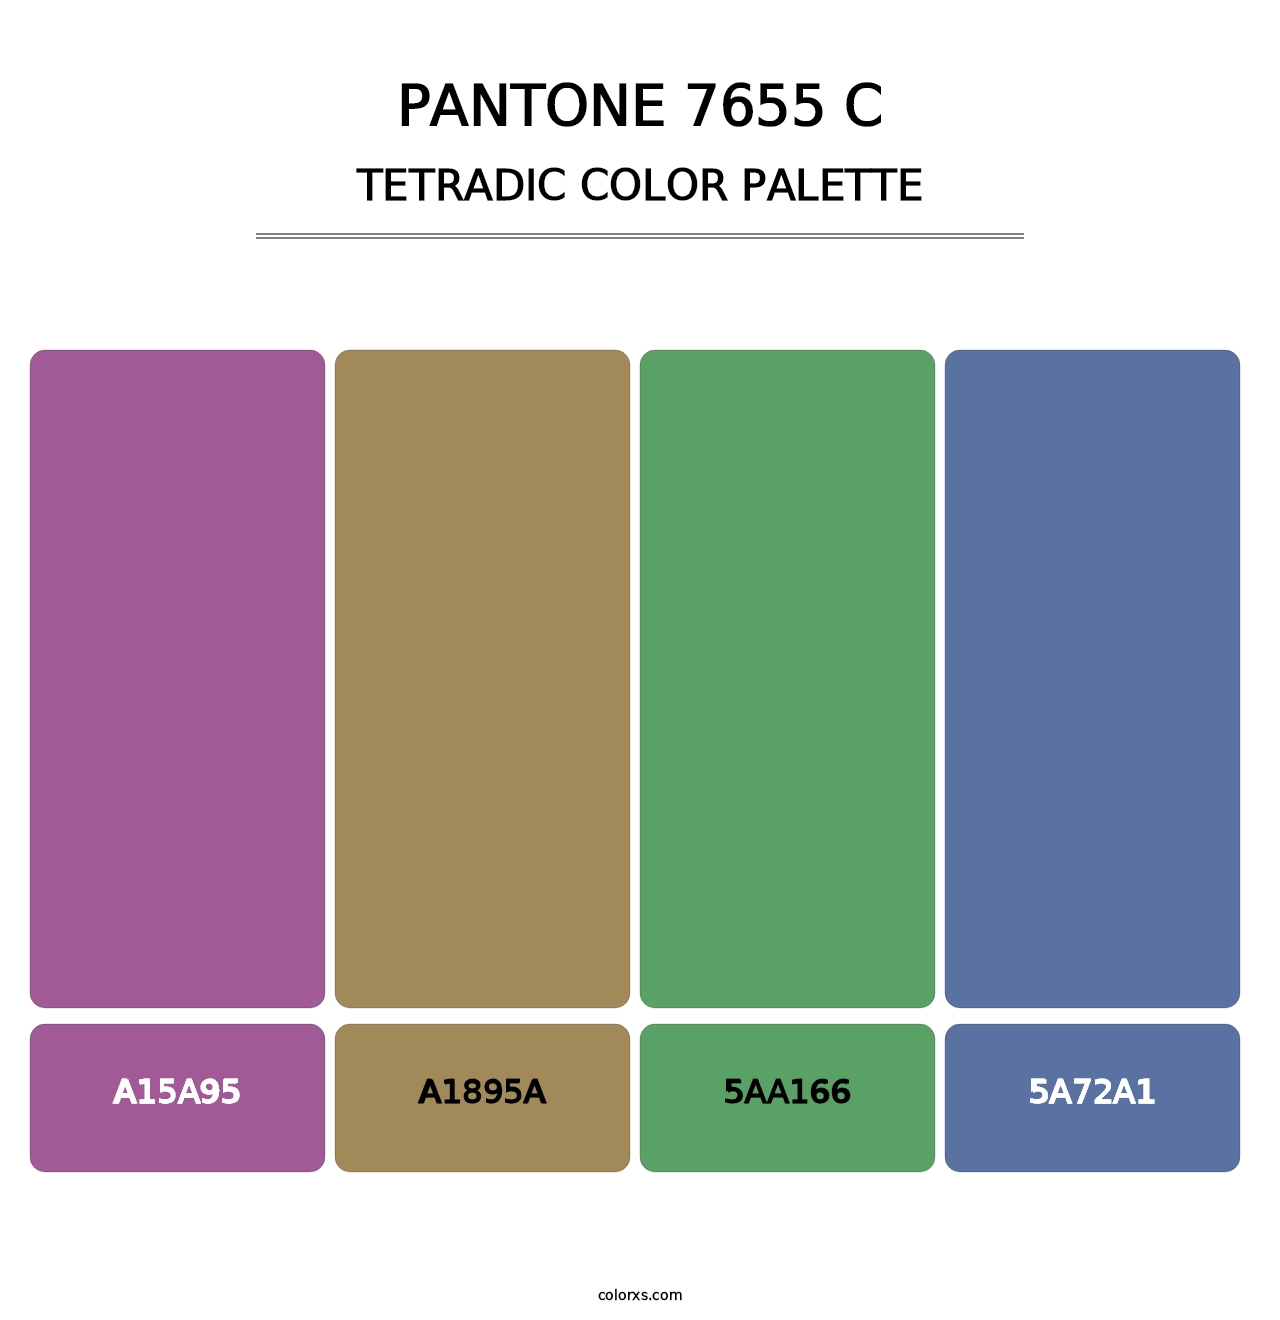 PANTONE 7655 C - Tetradic Color Palette